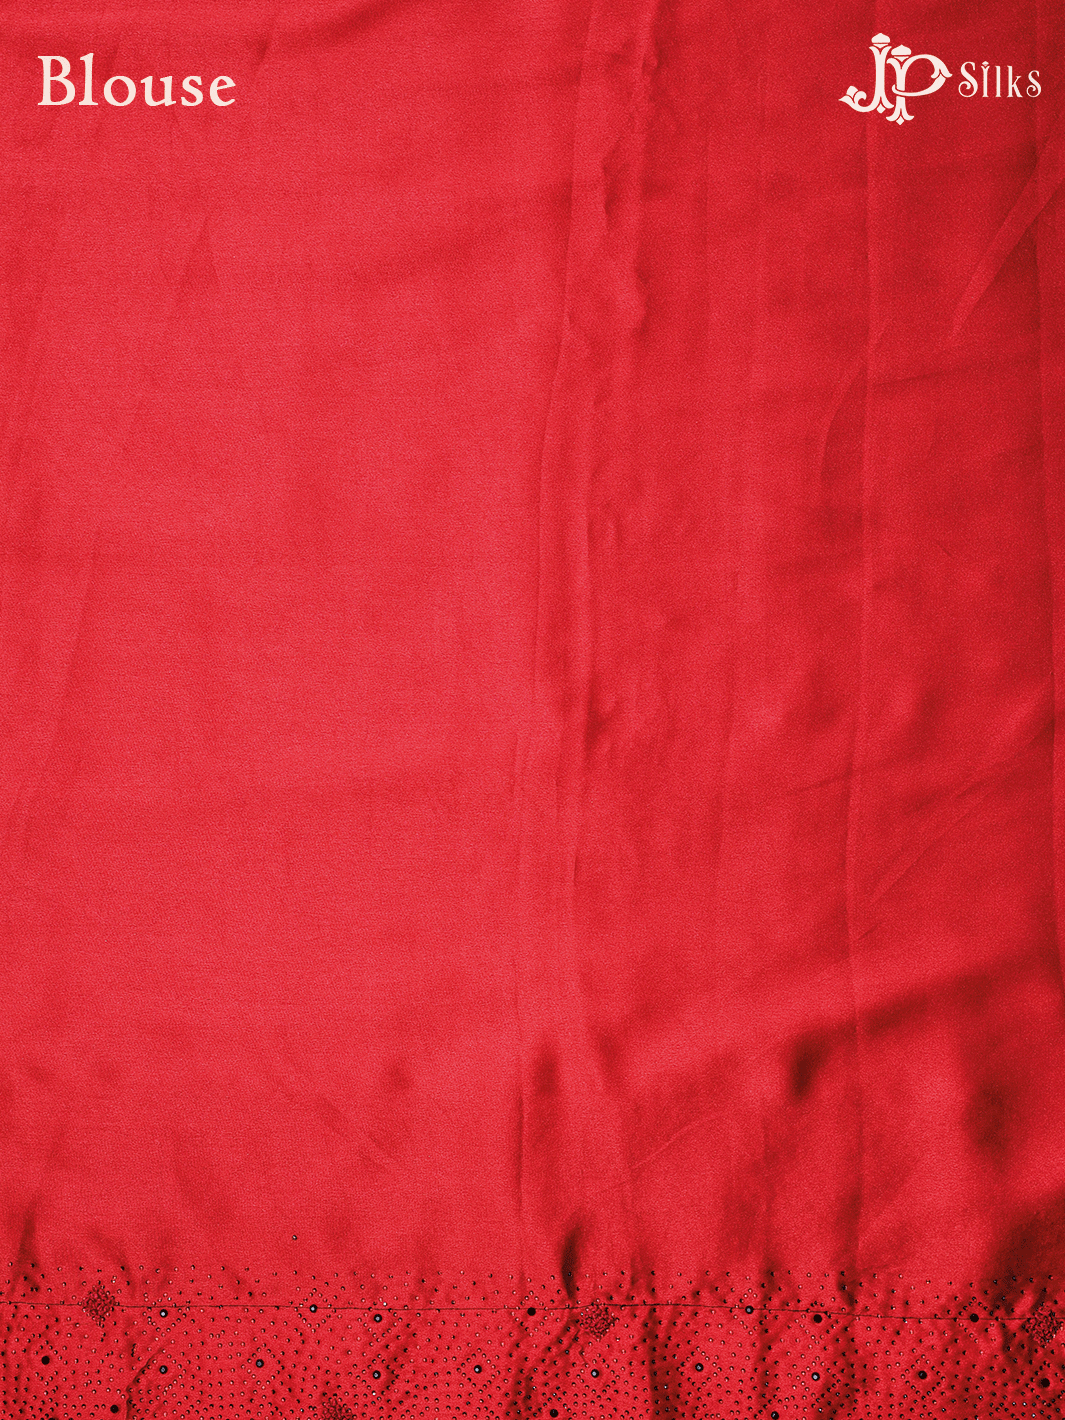 Black Red Crepe Fancy Saree - C1530 - View 2